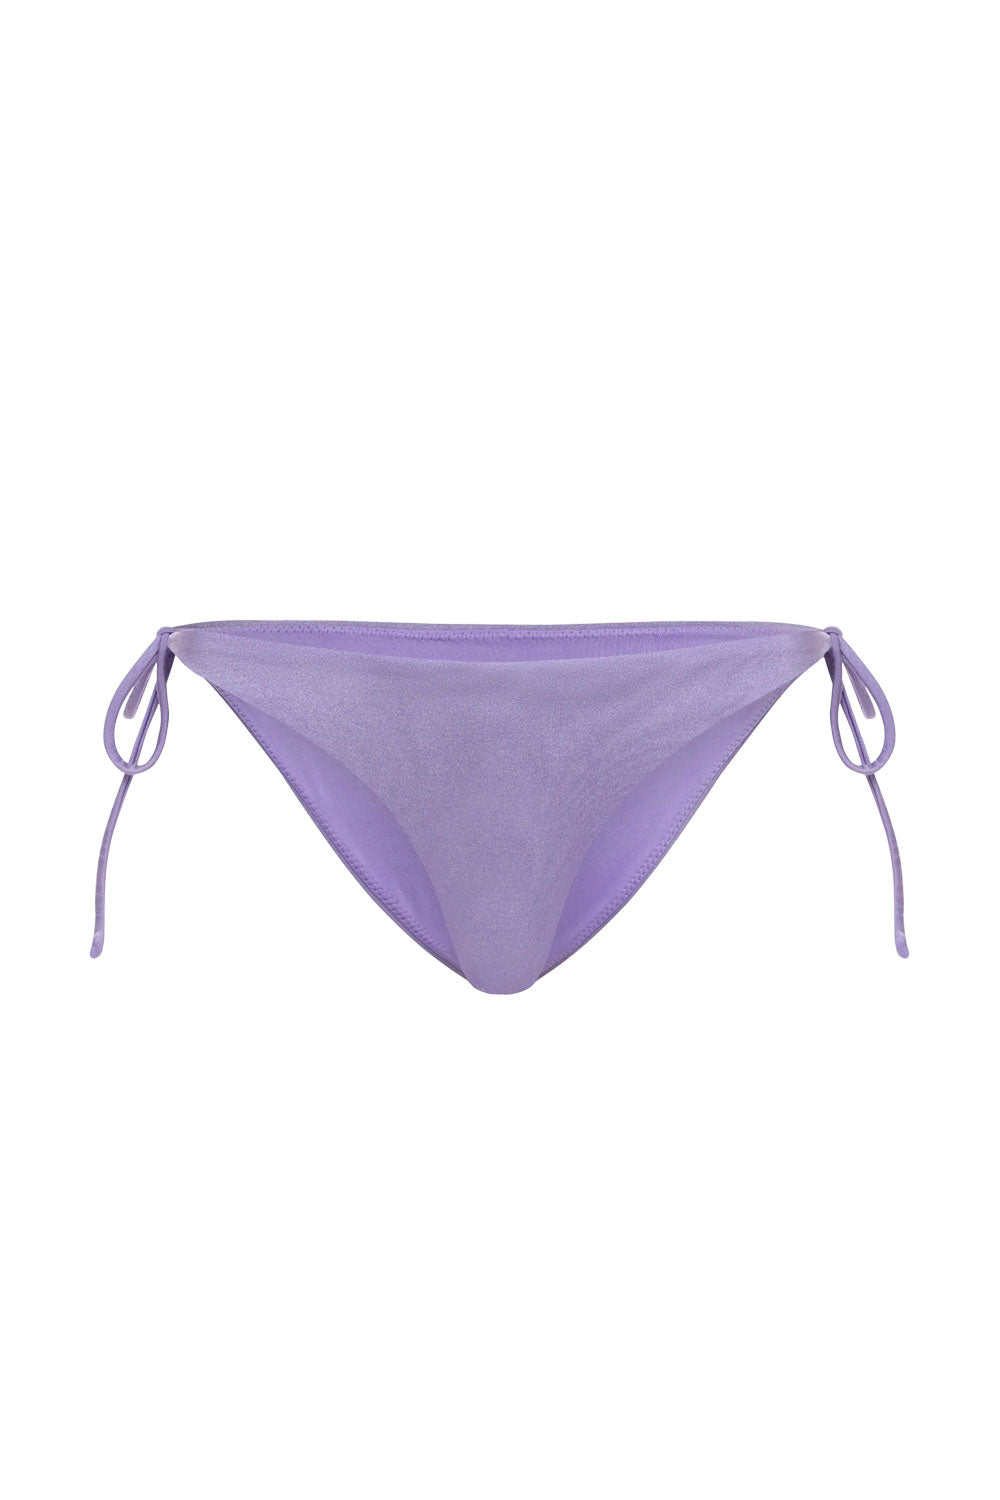 lavender tie side bikini bottoms